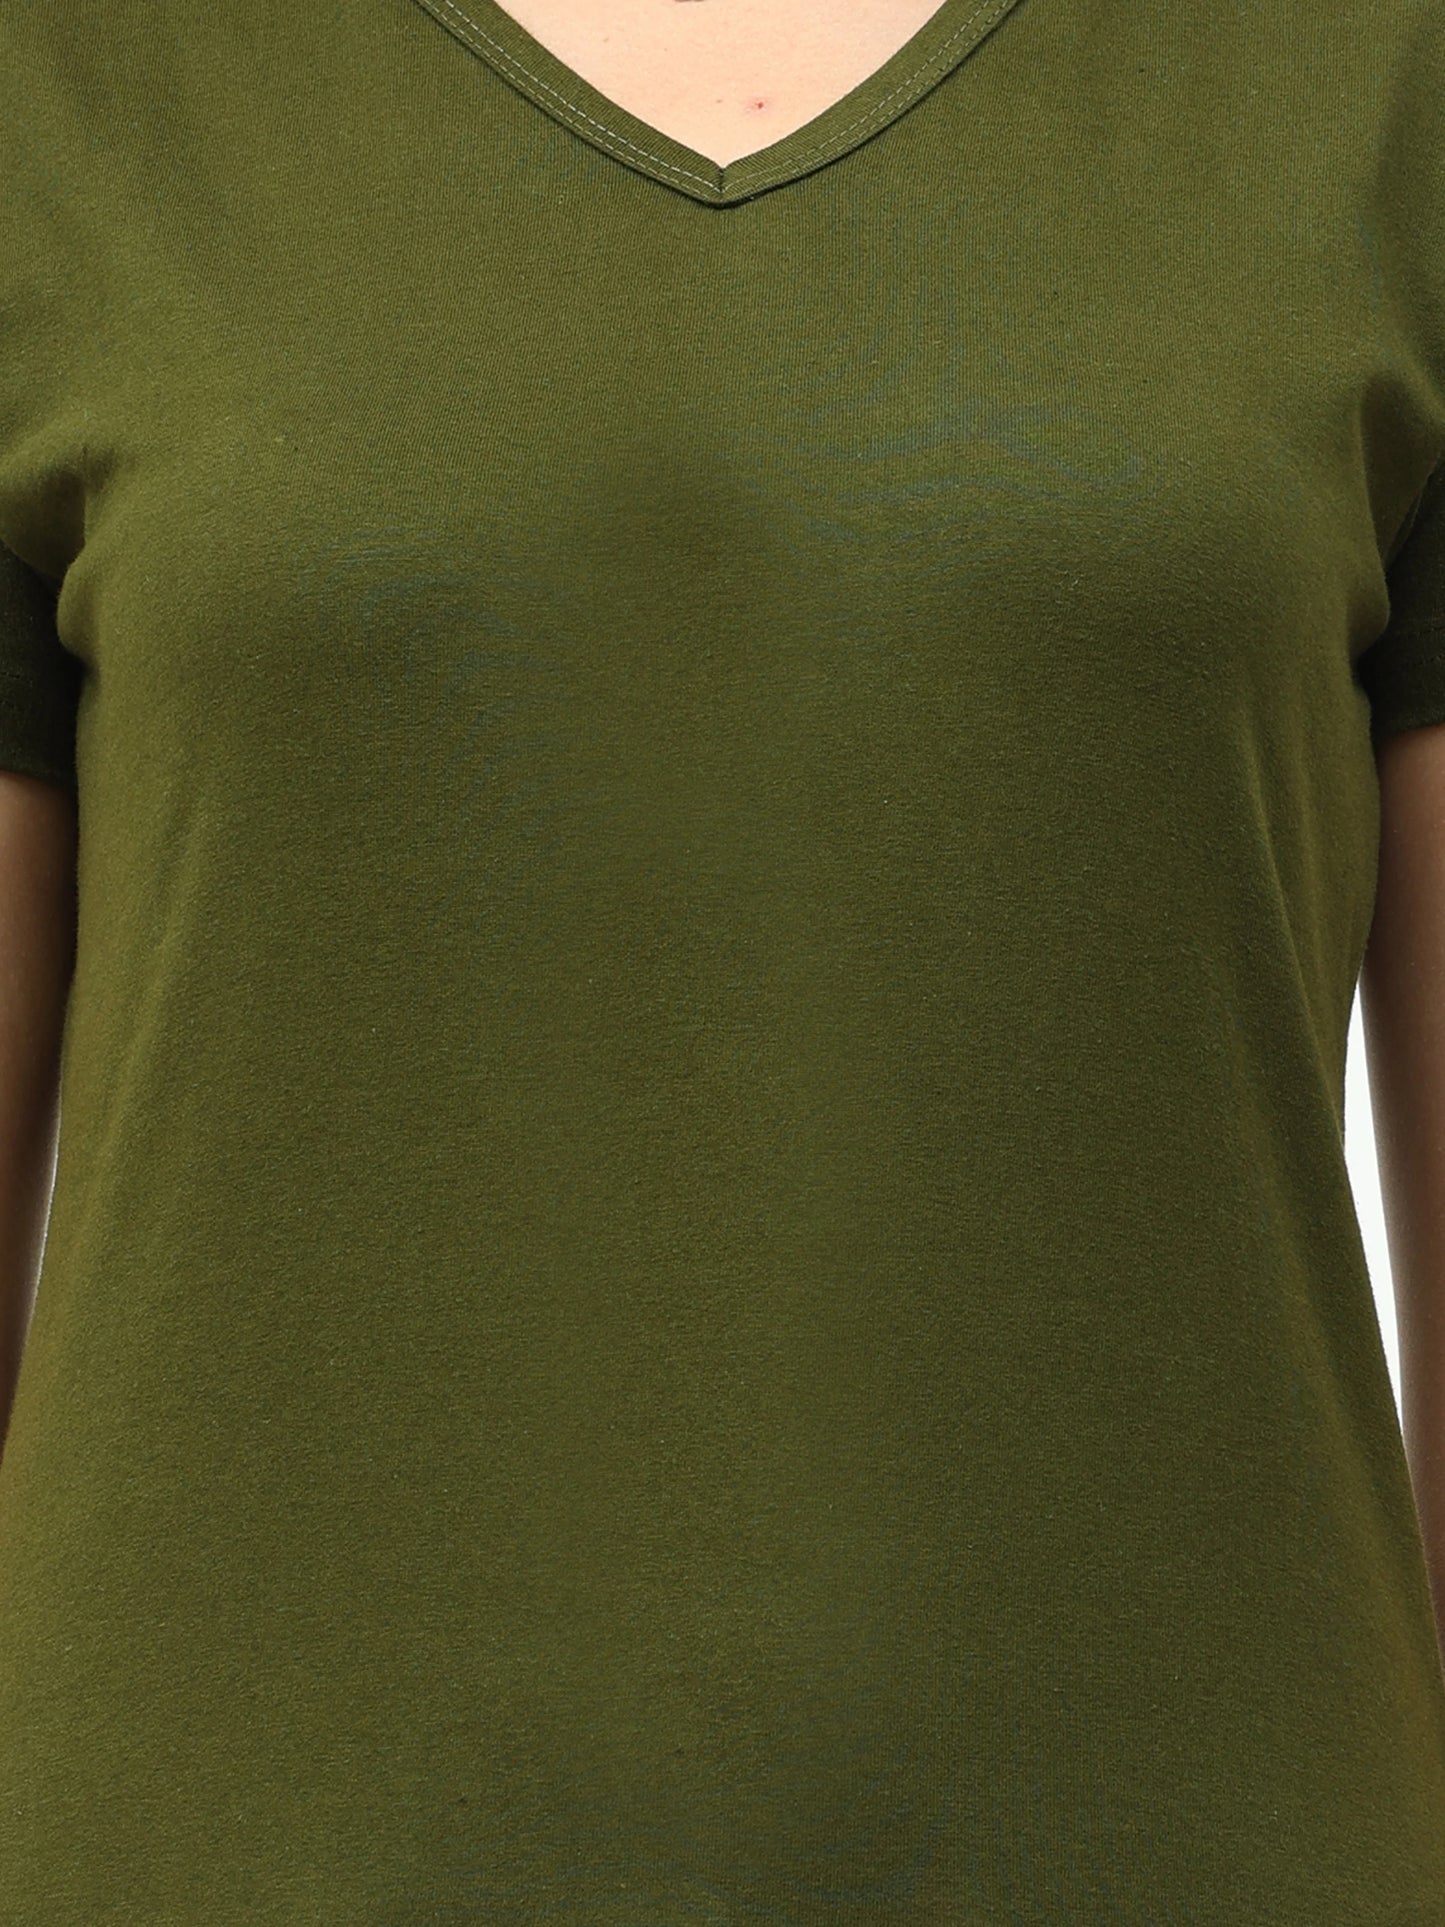 Women's Cotton Plain V Neck Half Sleeve Olive Green Color T-Shirt